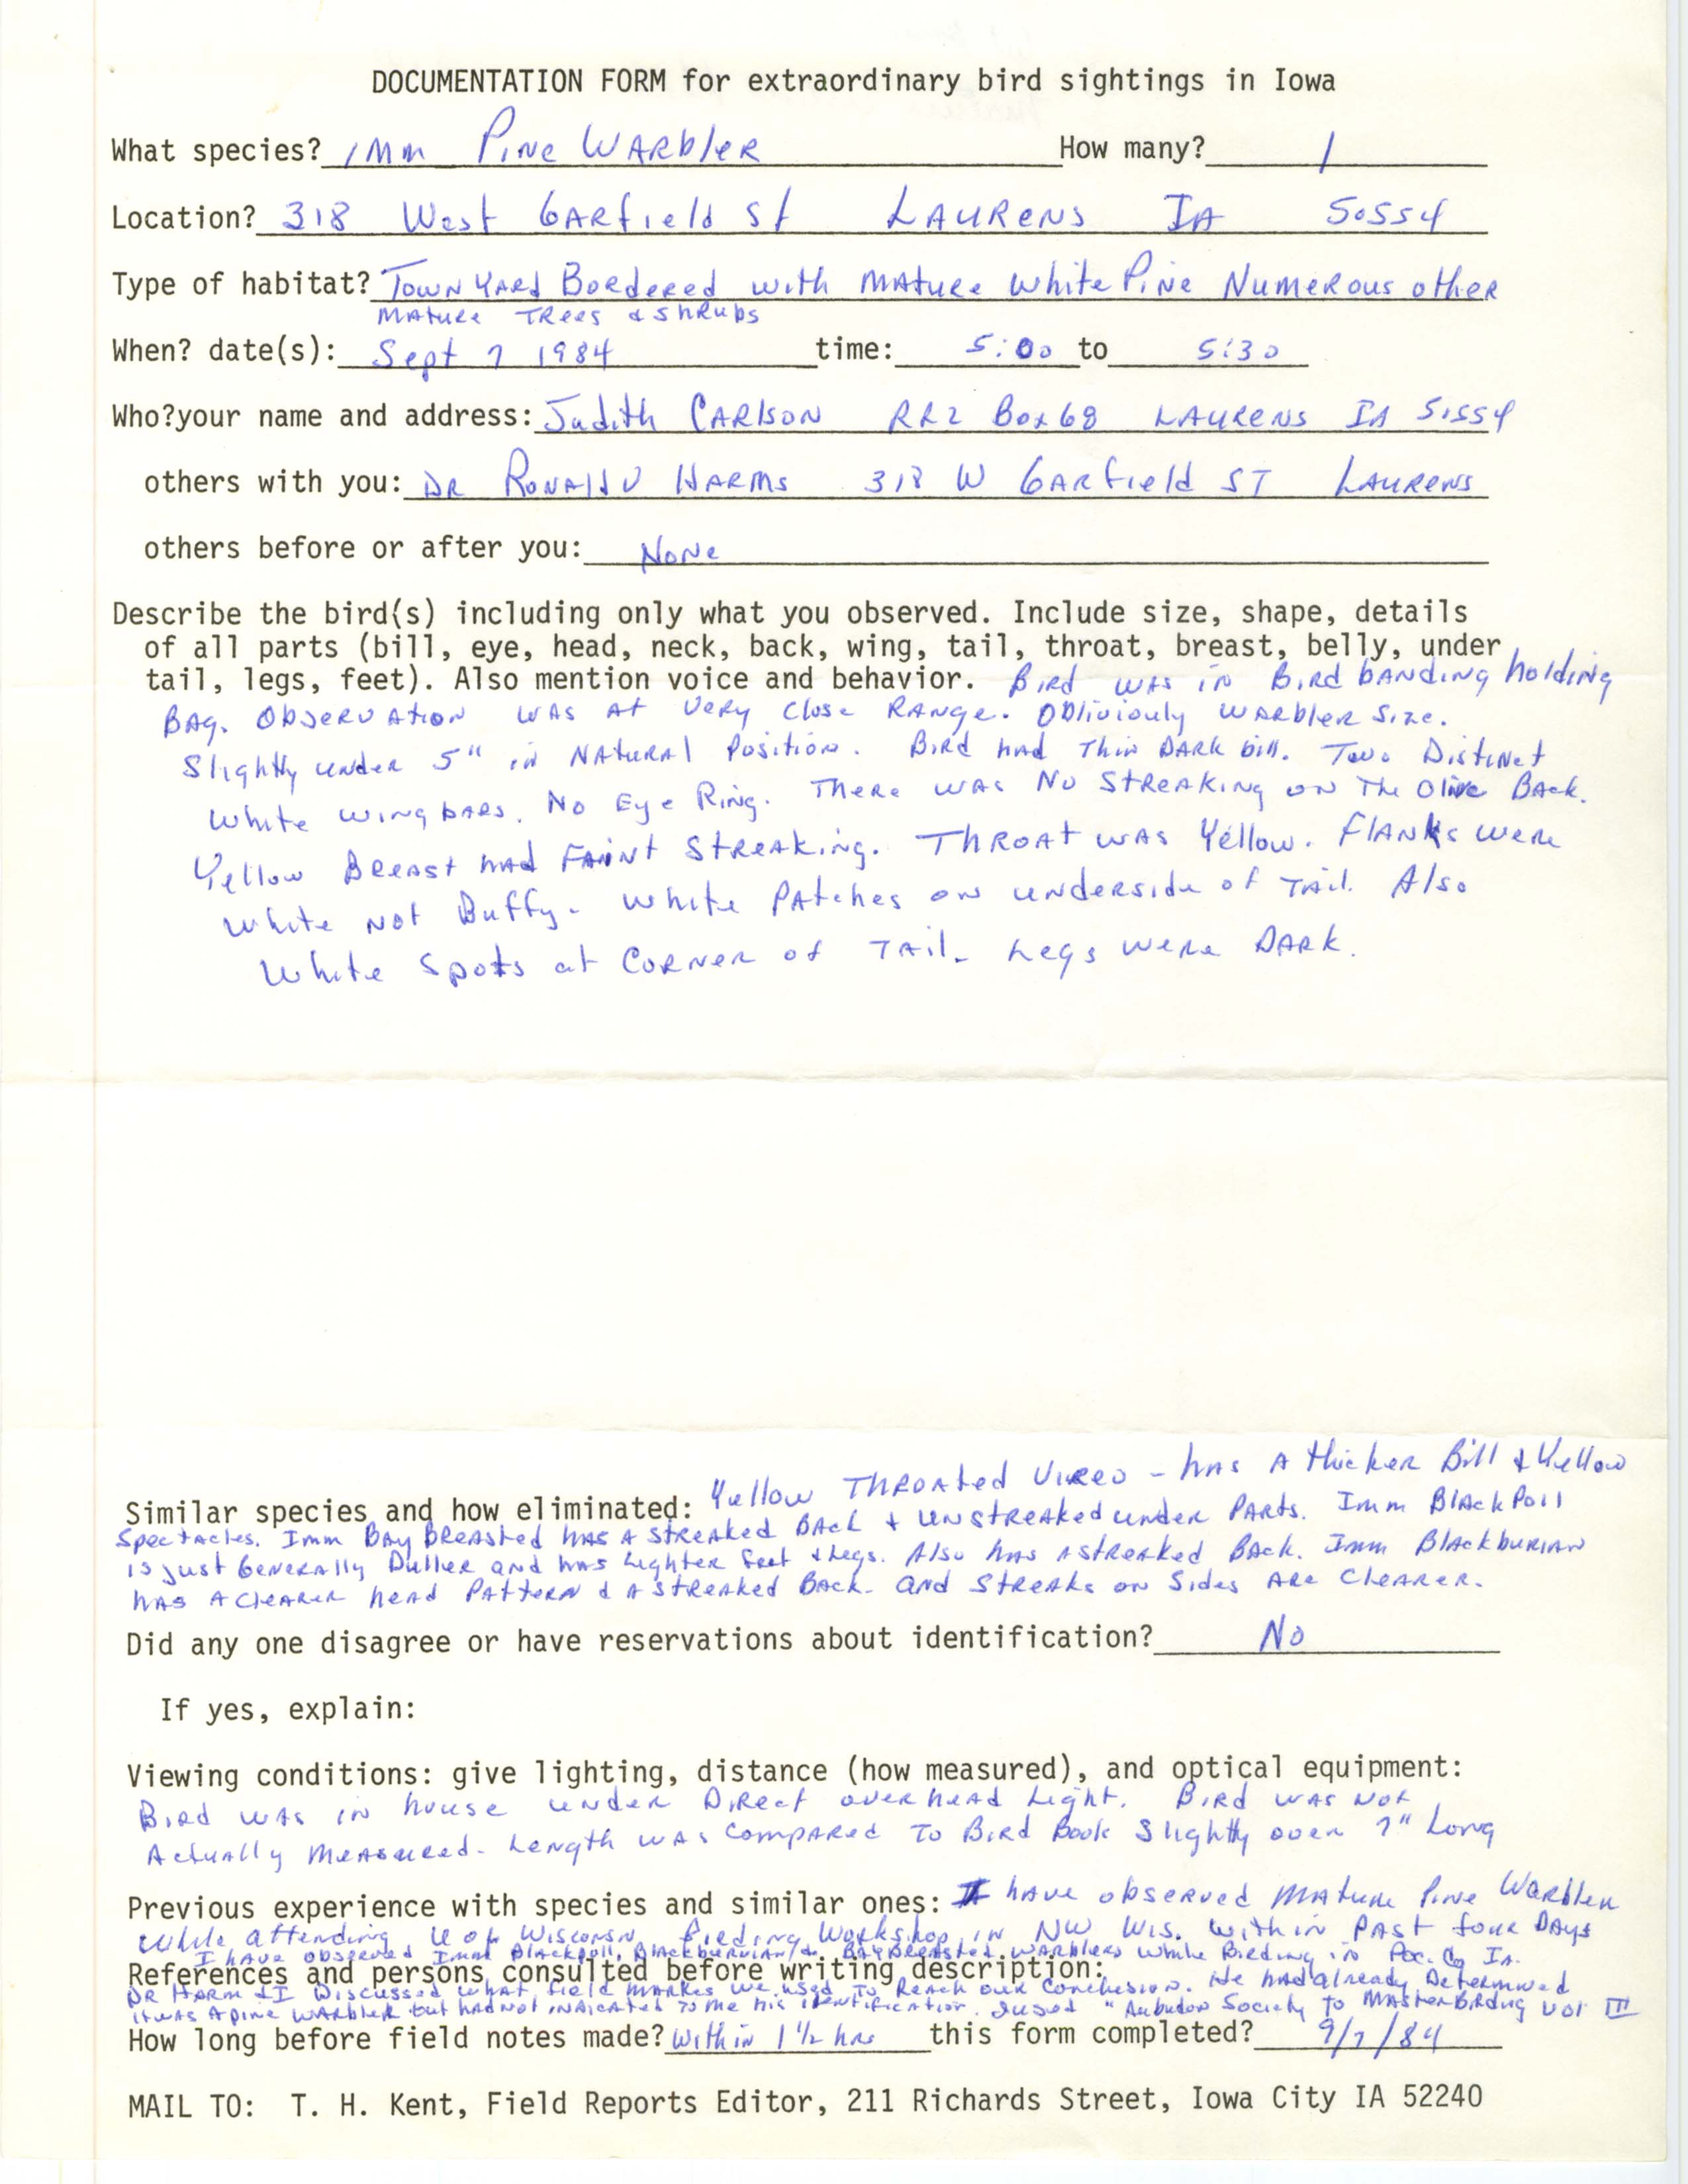 Rare bird documentation form for Pine Warbler at Laurens in 1984